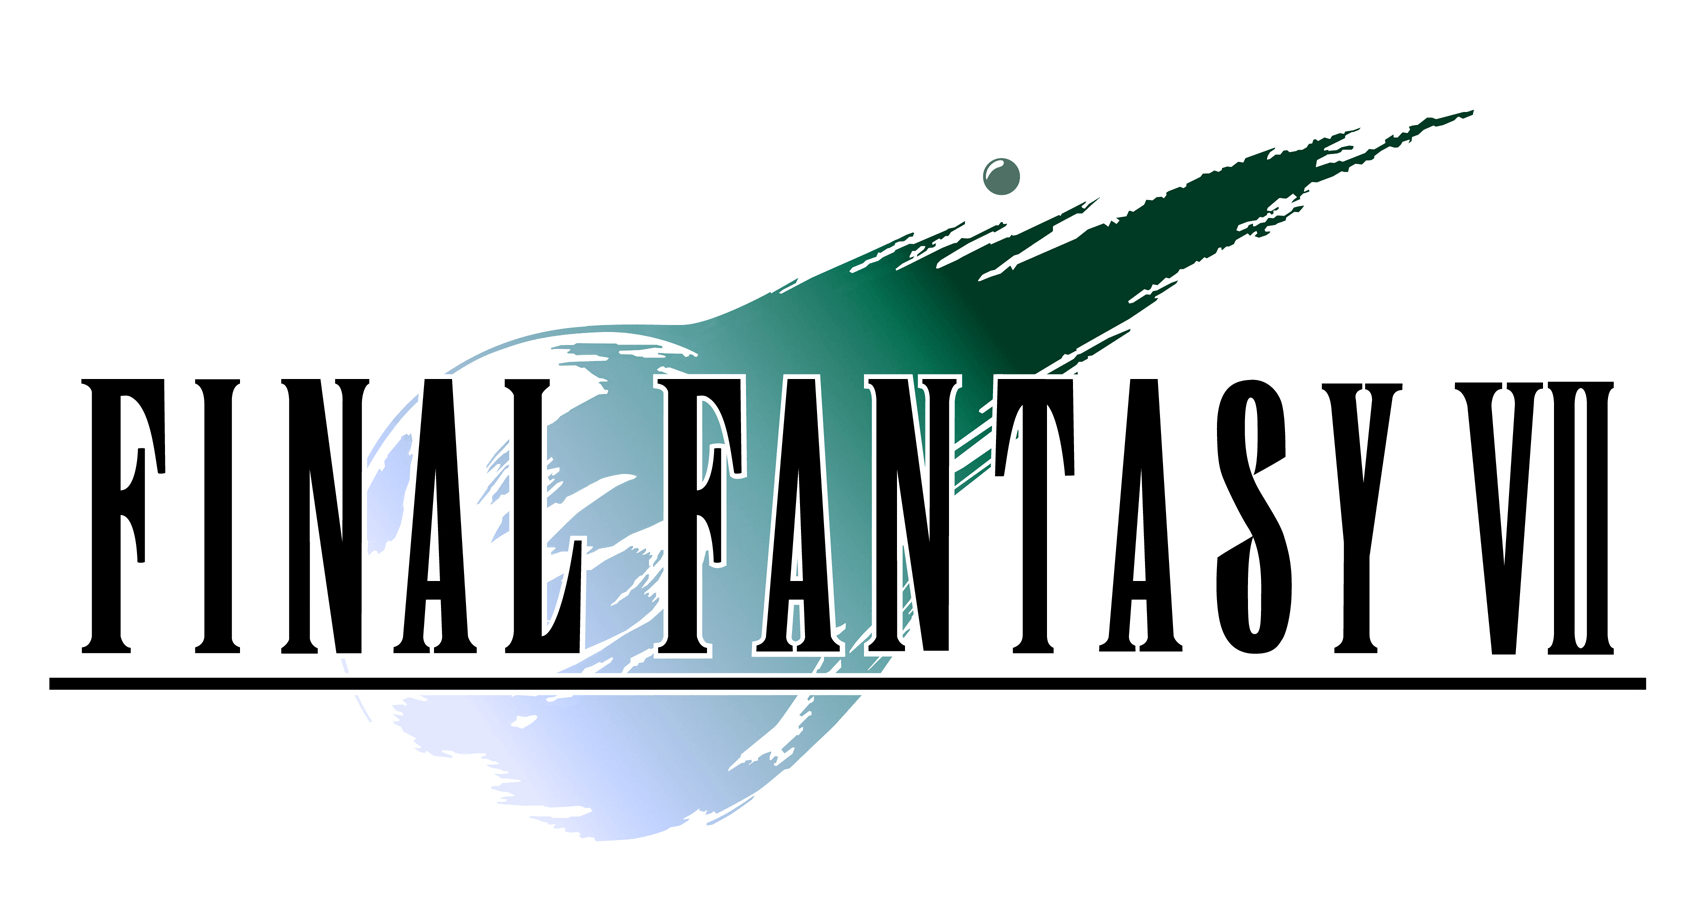 VII Logo - Final Fantasy VII logos - Album on Imgur